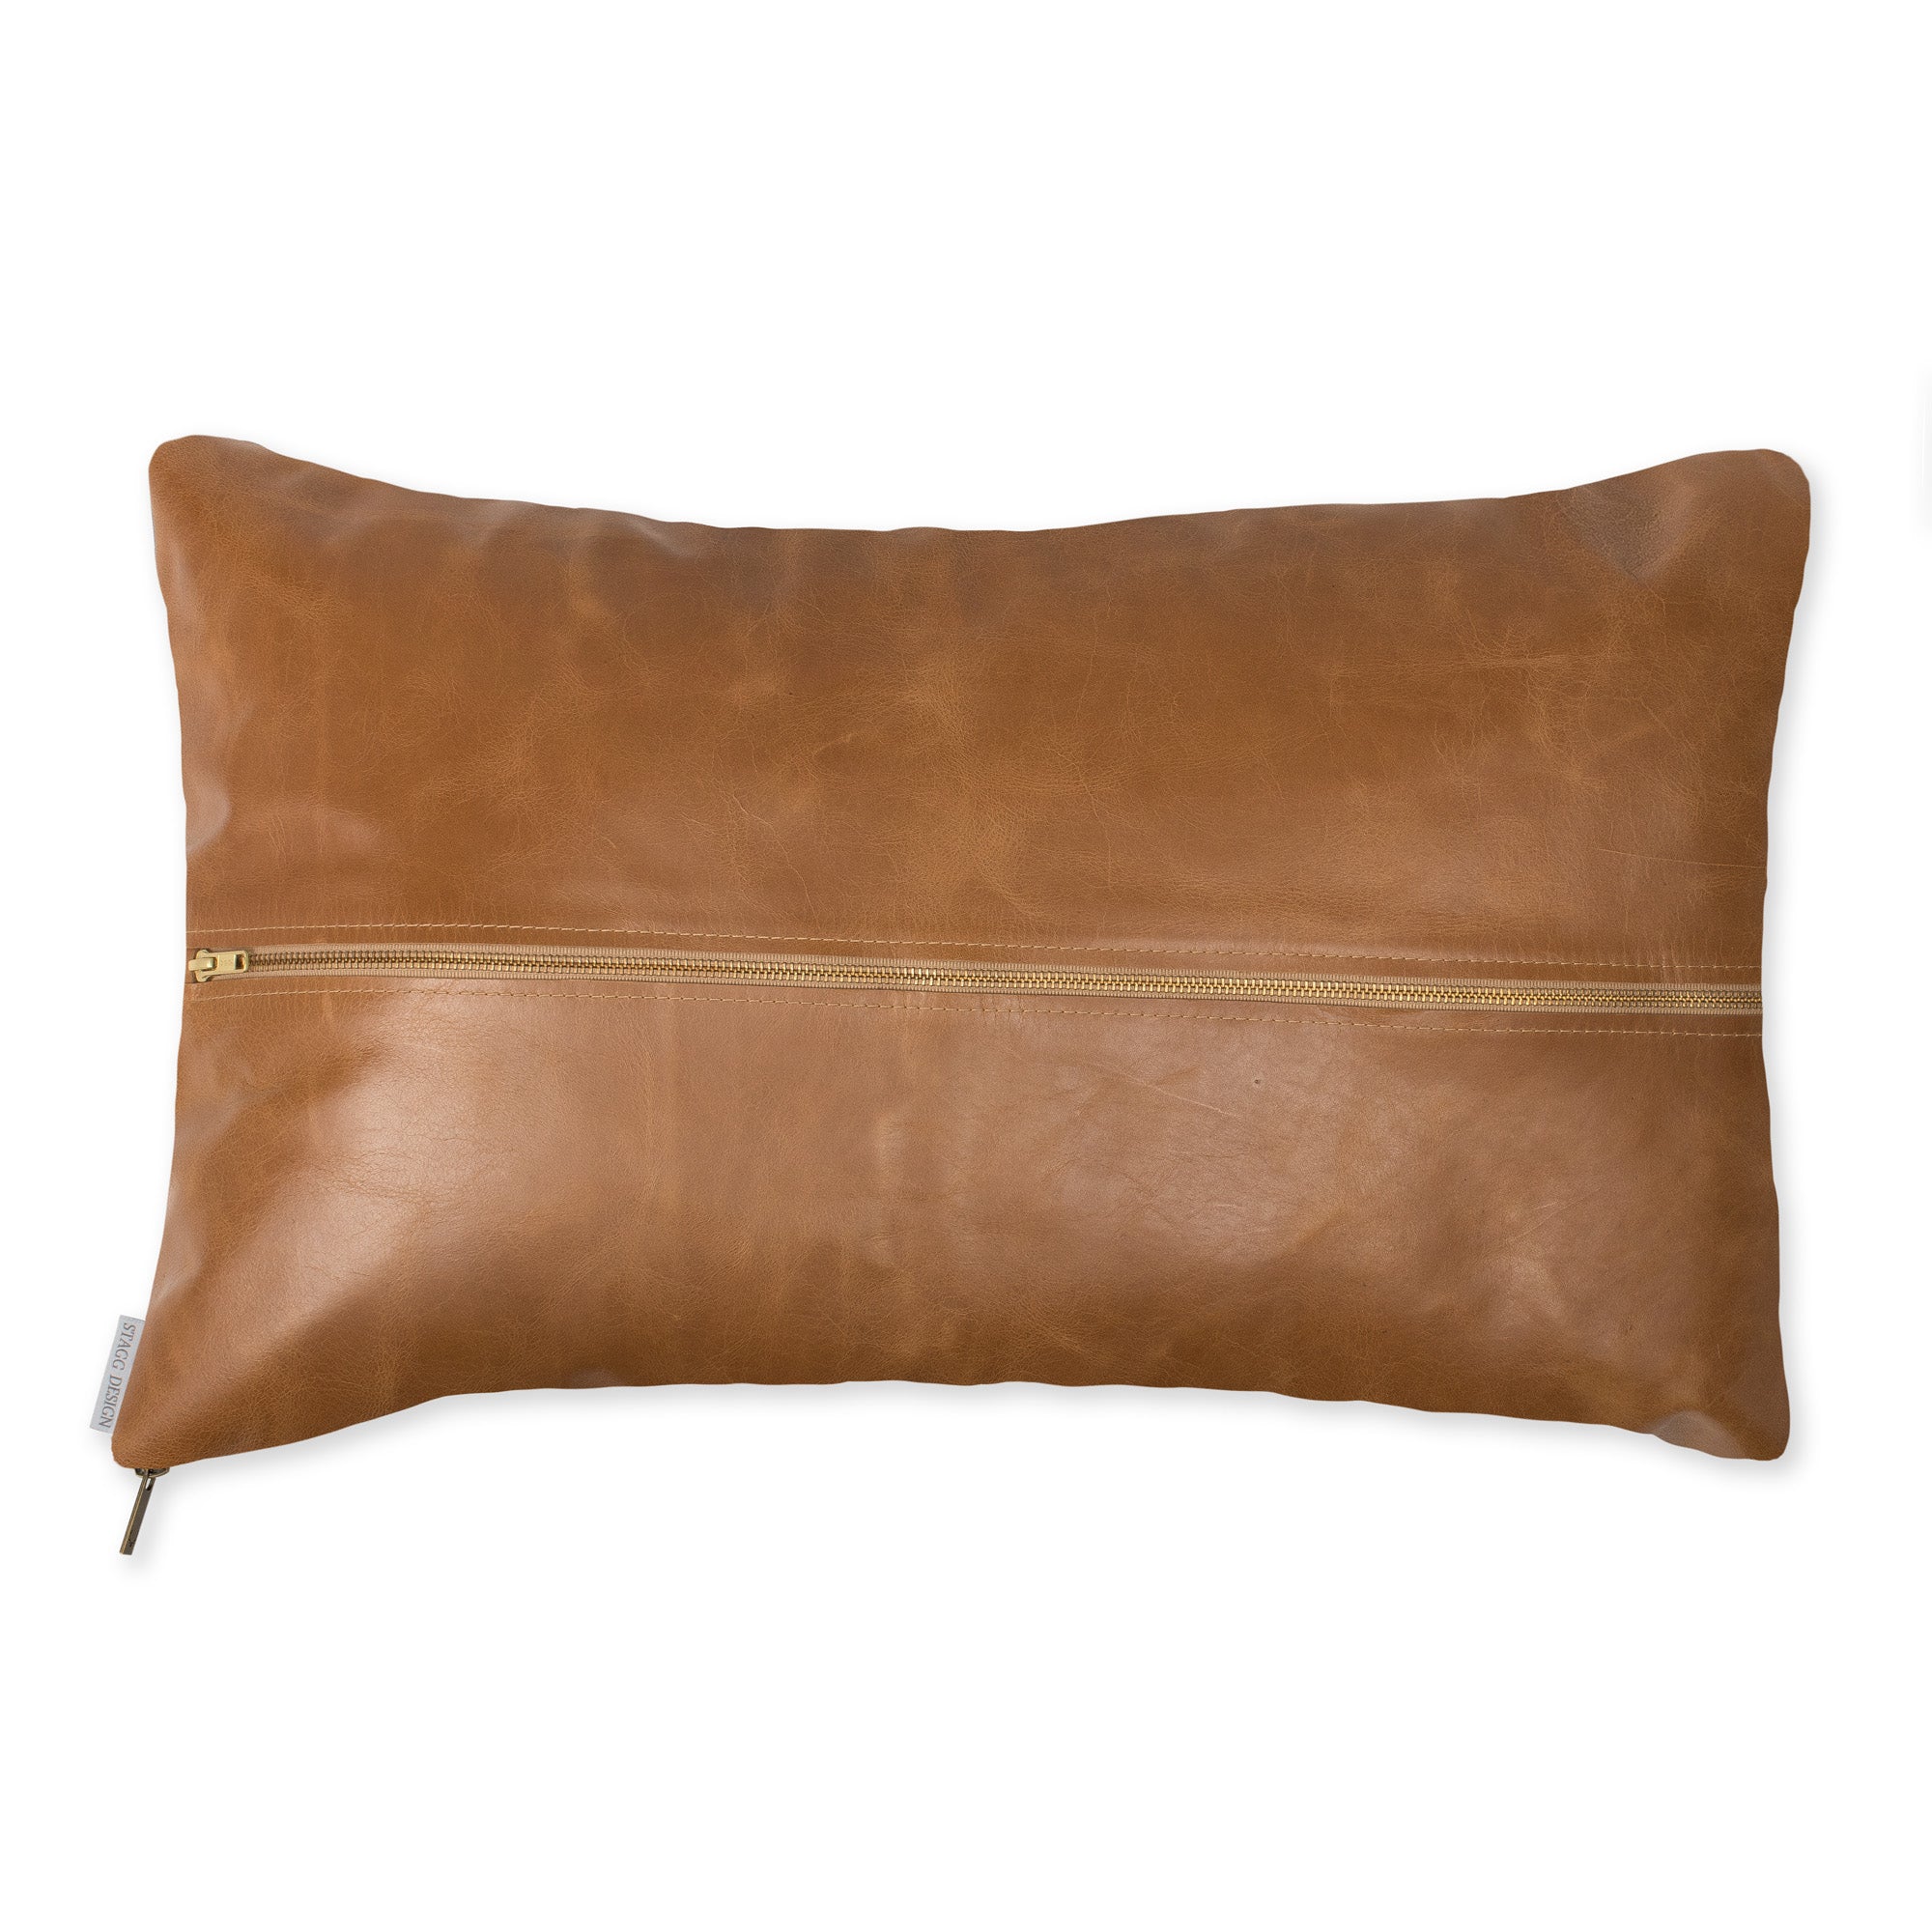 Signature Leather Pillow - Camel